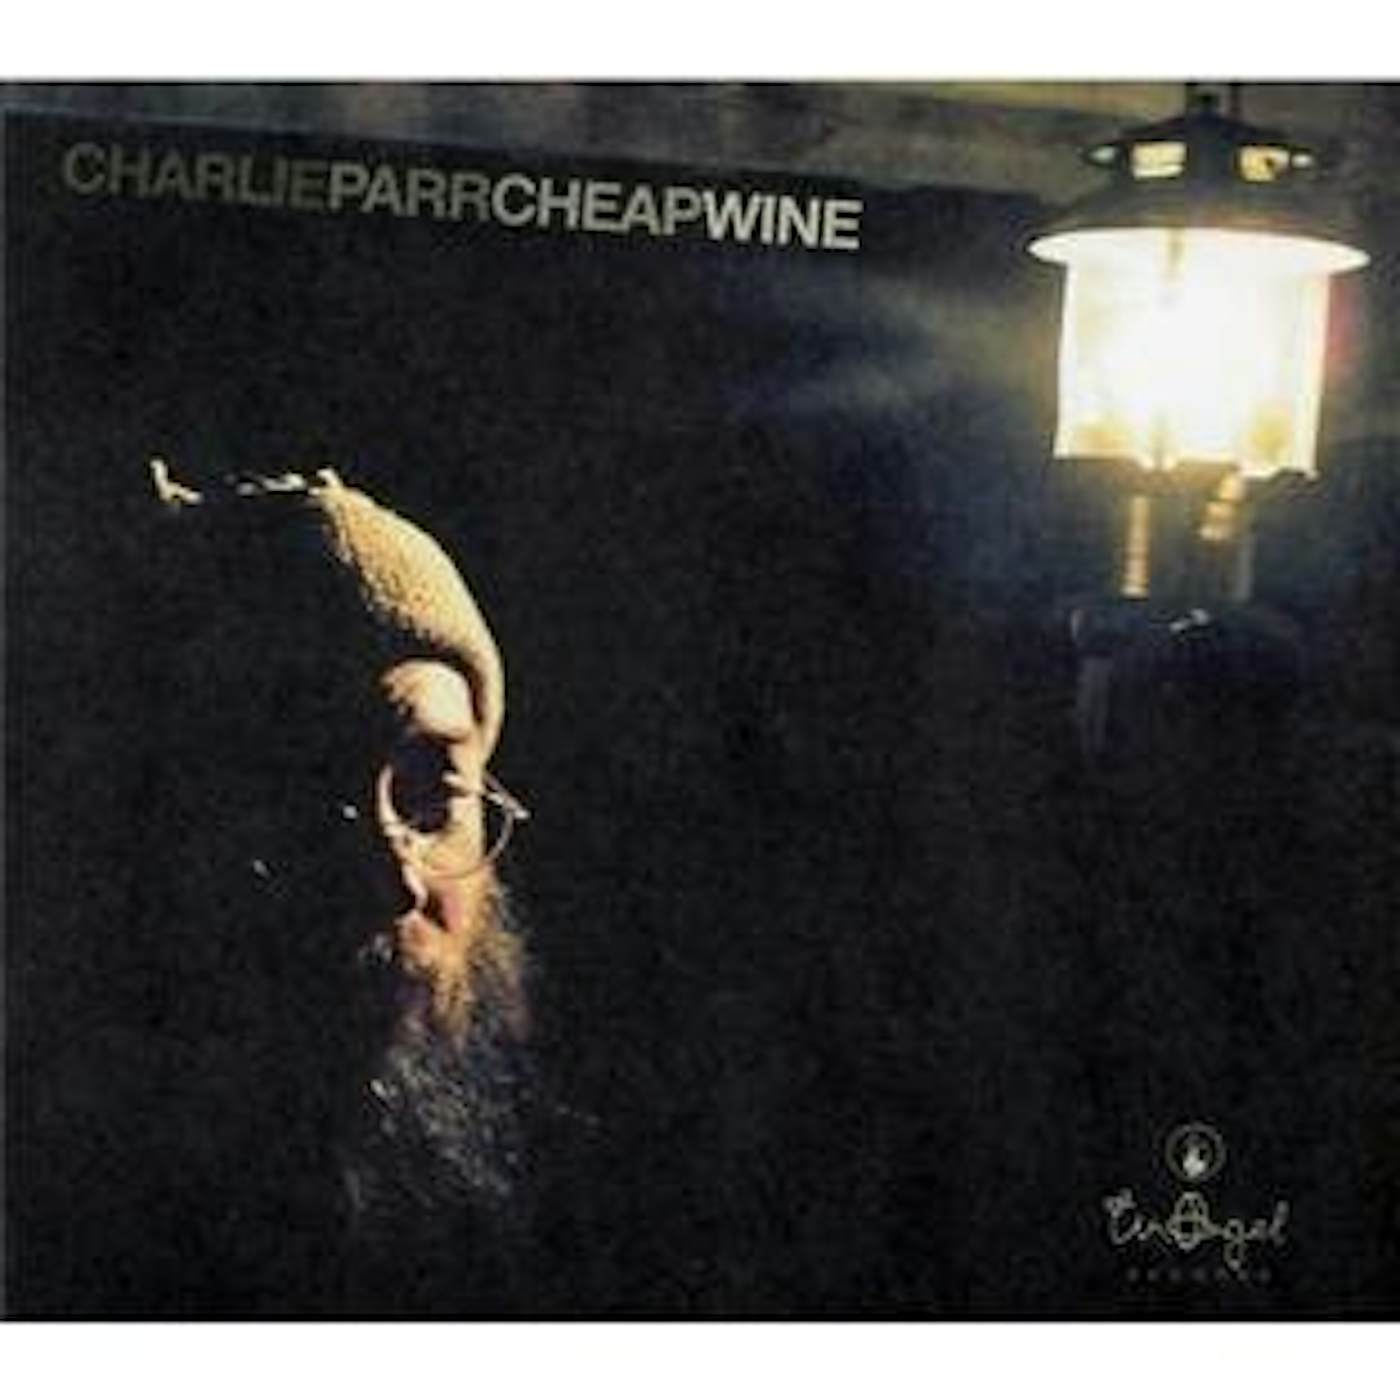 Charlie Parr CHEAP WINE CD